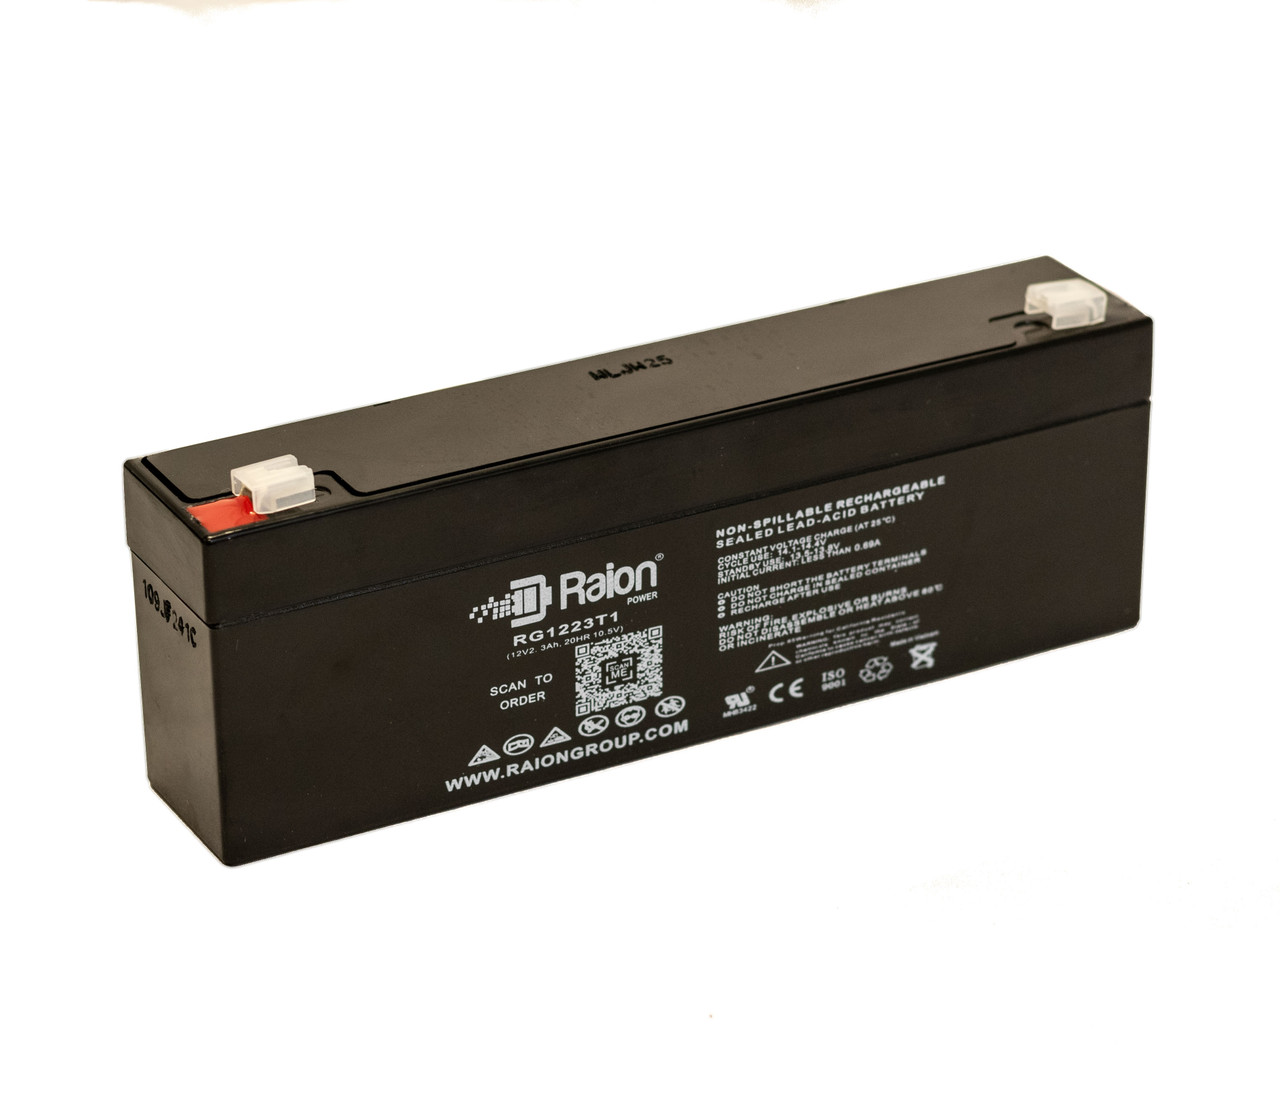 Raion Power RG1223T1 Replacement Battery for Sscor 2014 Suction Unit Duet